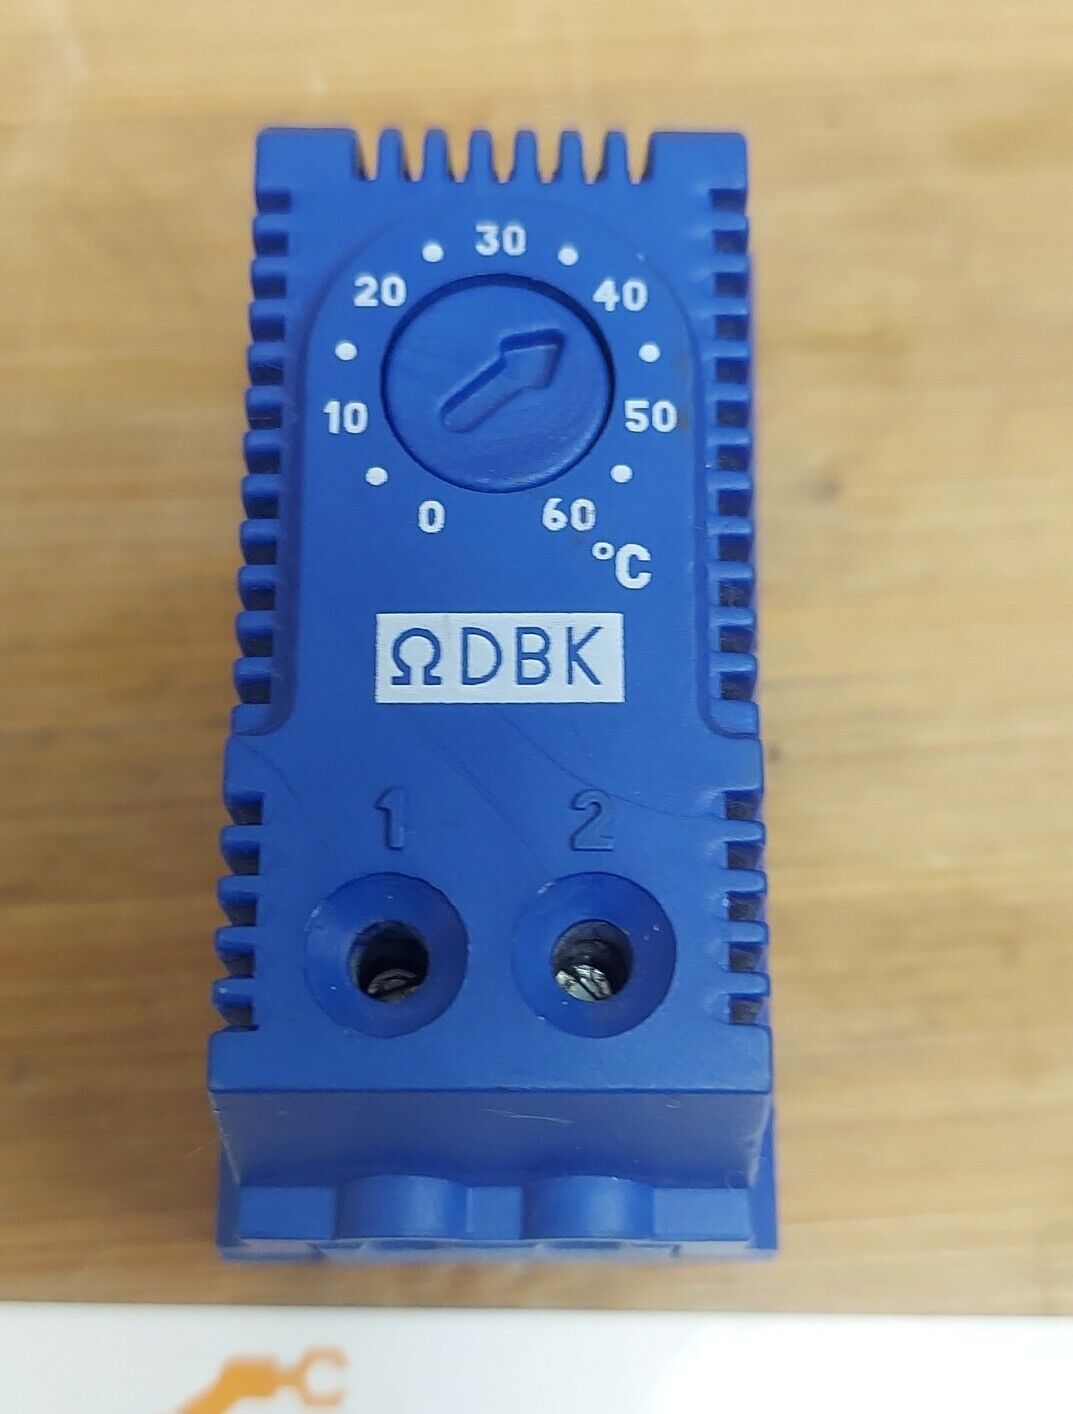 Omega DBK FGT200 Thermostat 0-60°C (YE115) - 0